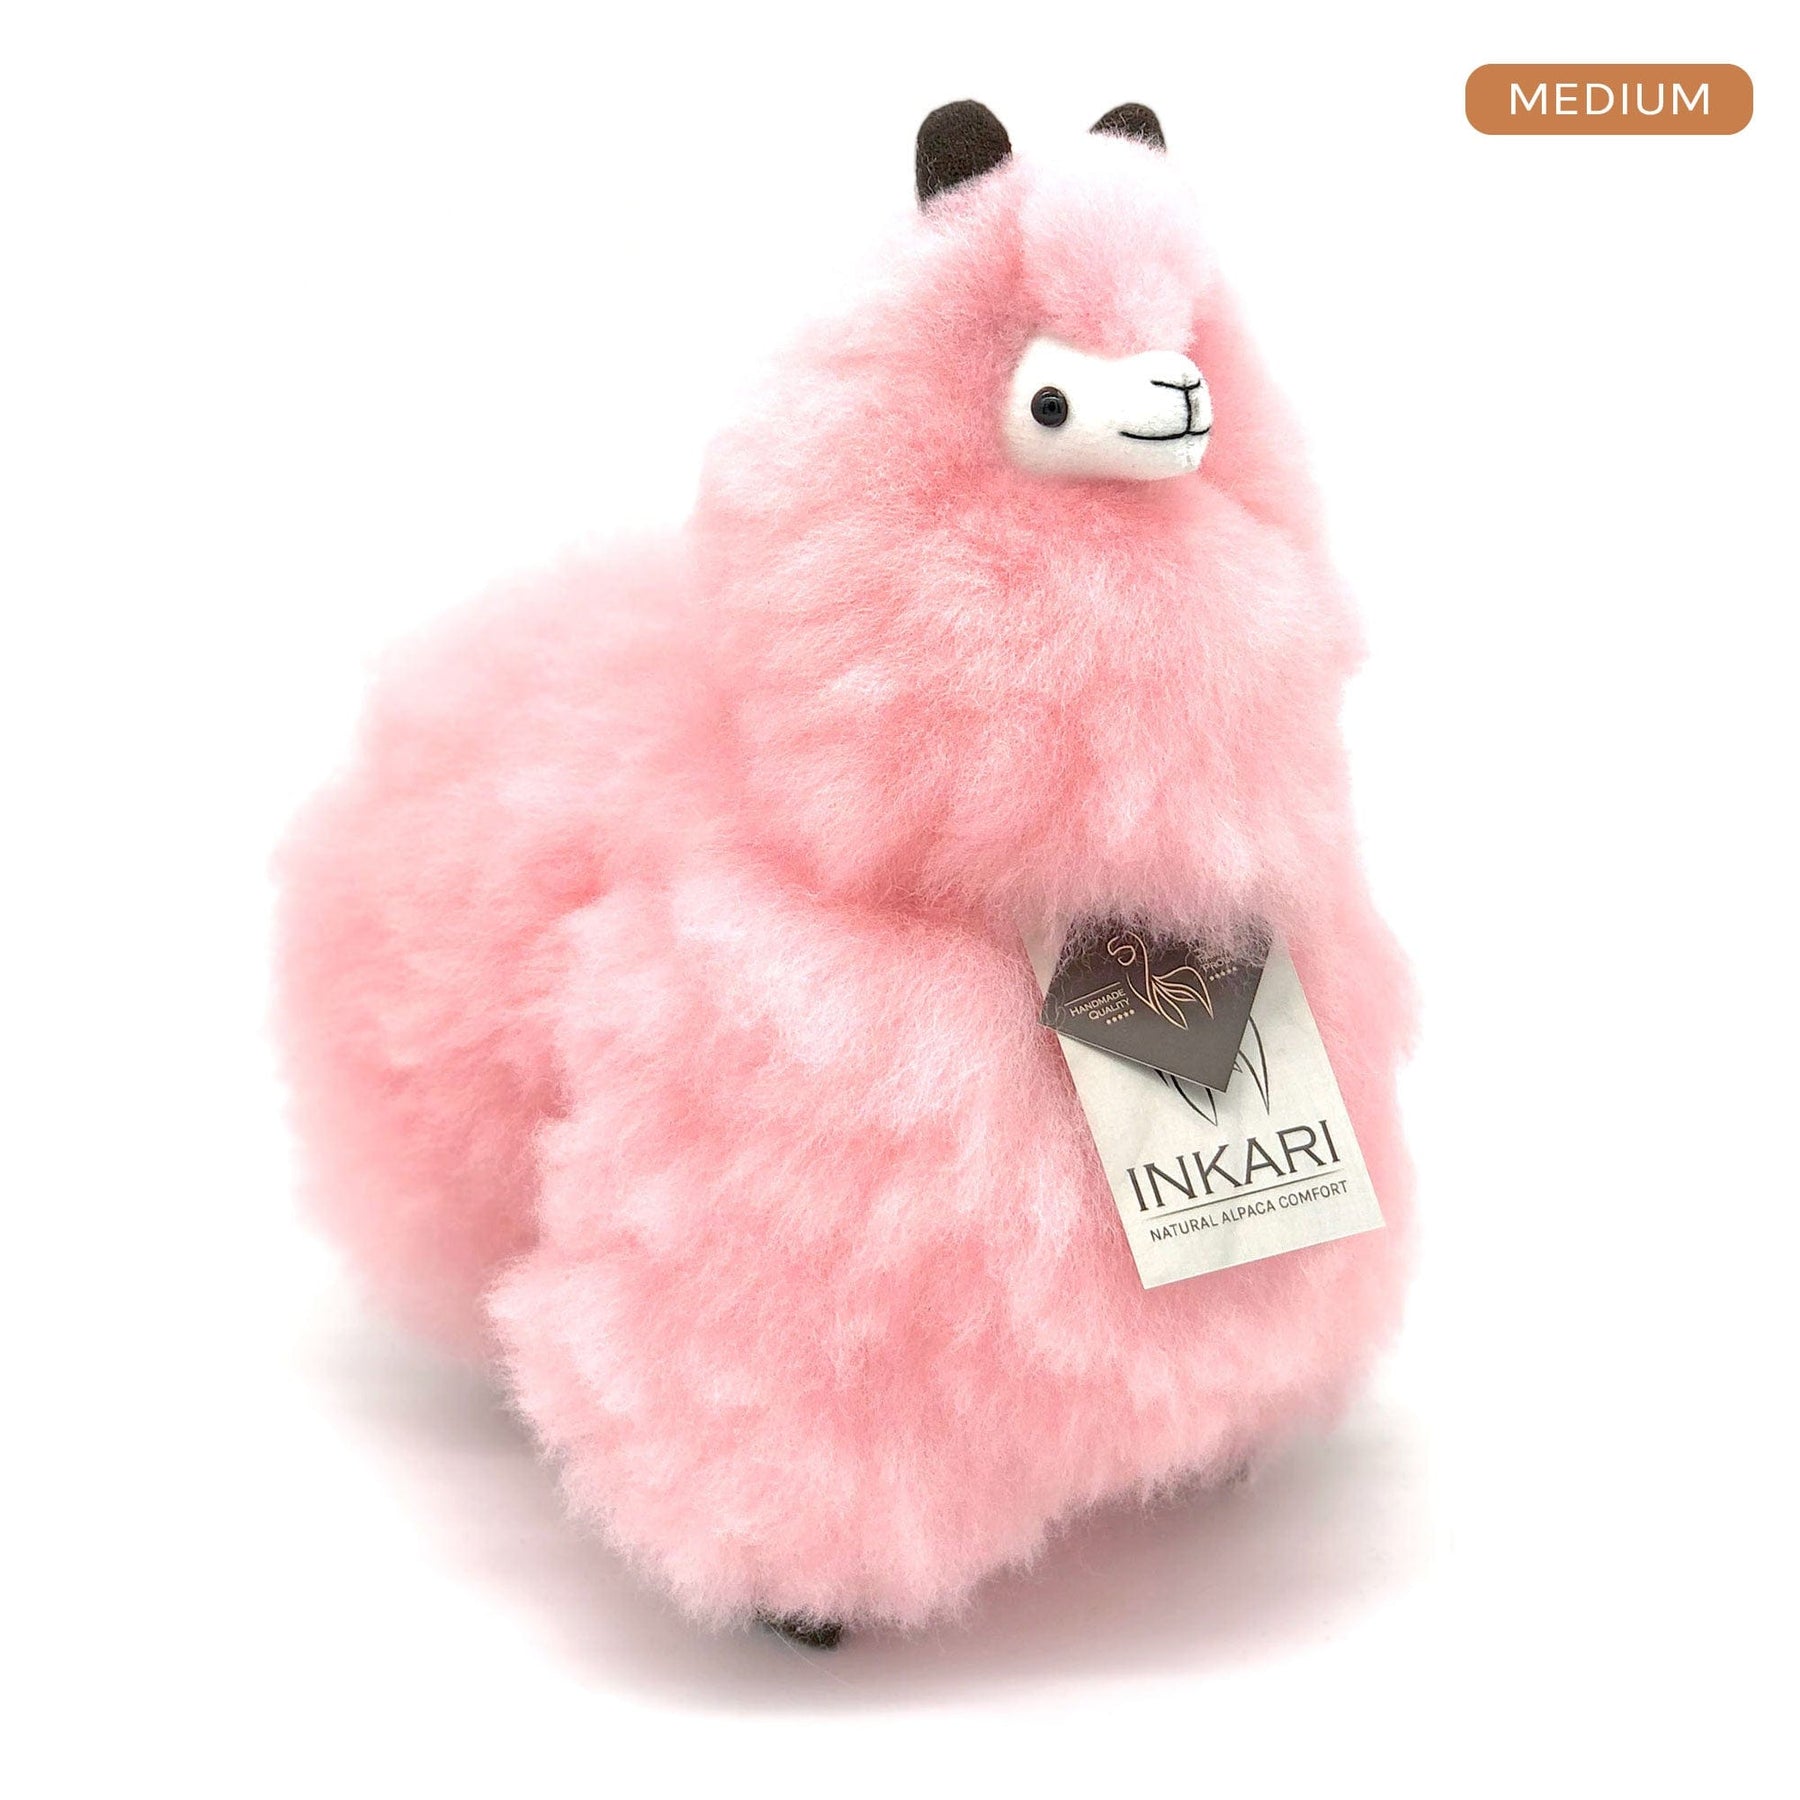 Cotton Candy - Medium Alpaca Toy (32cm) - Limited Edition